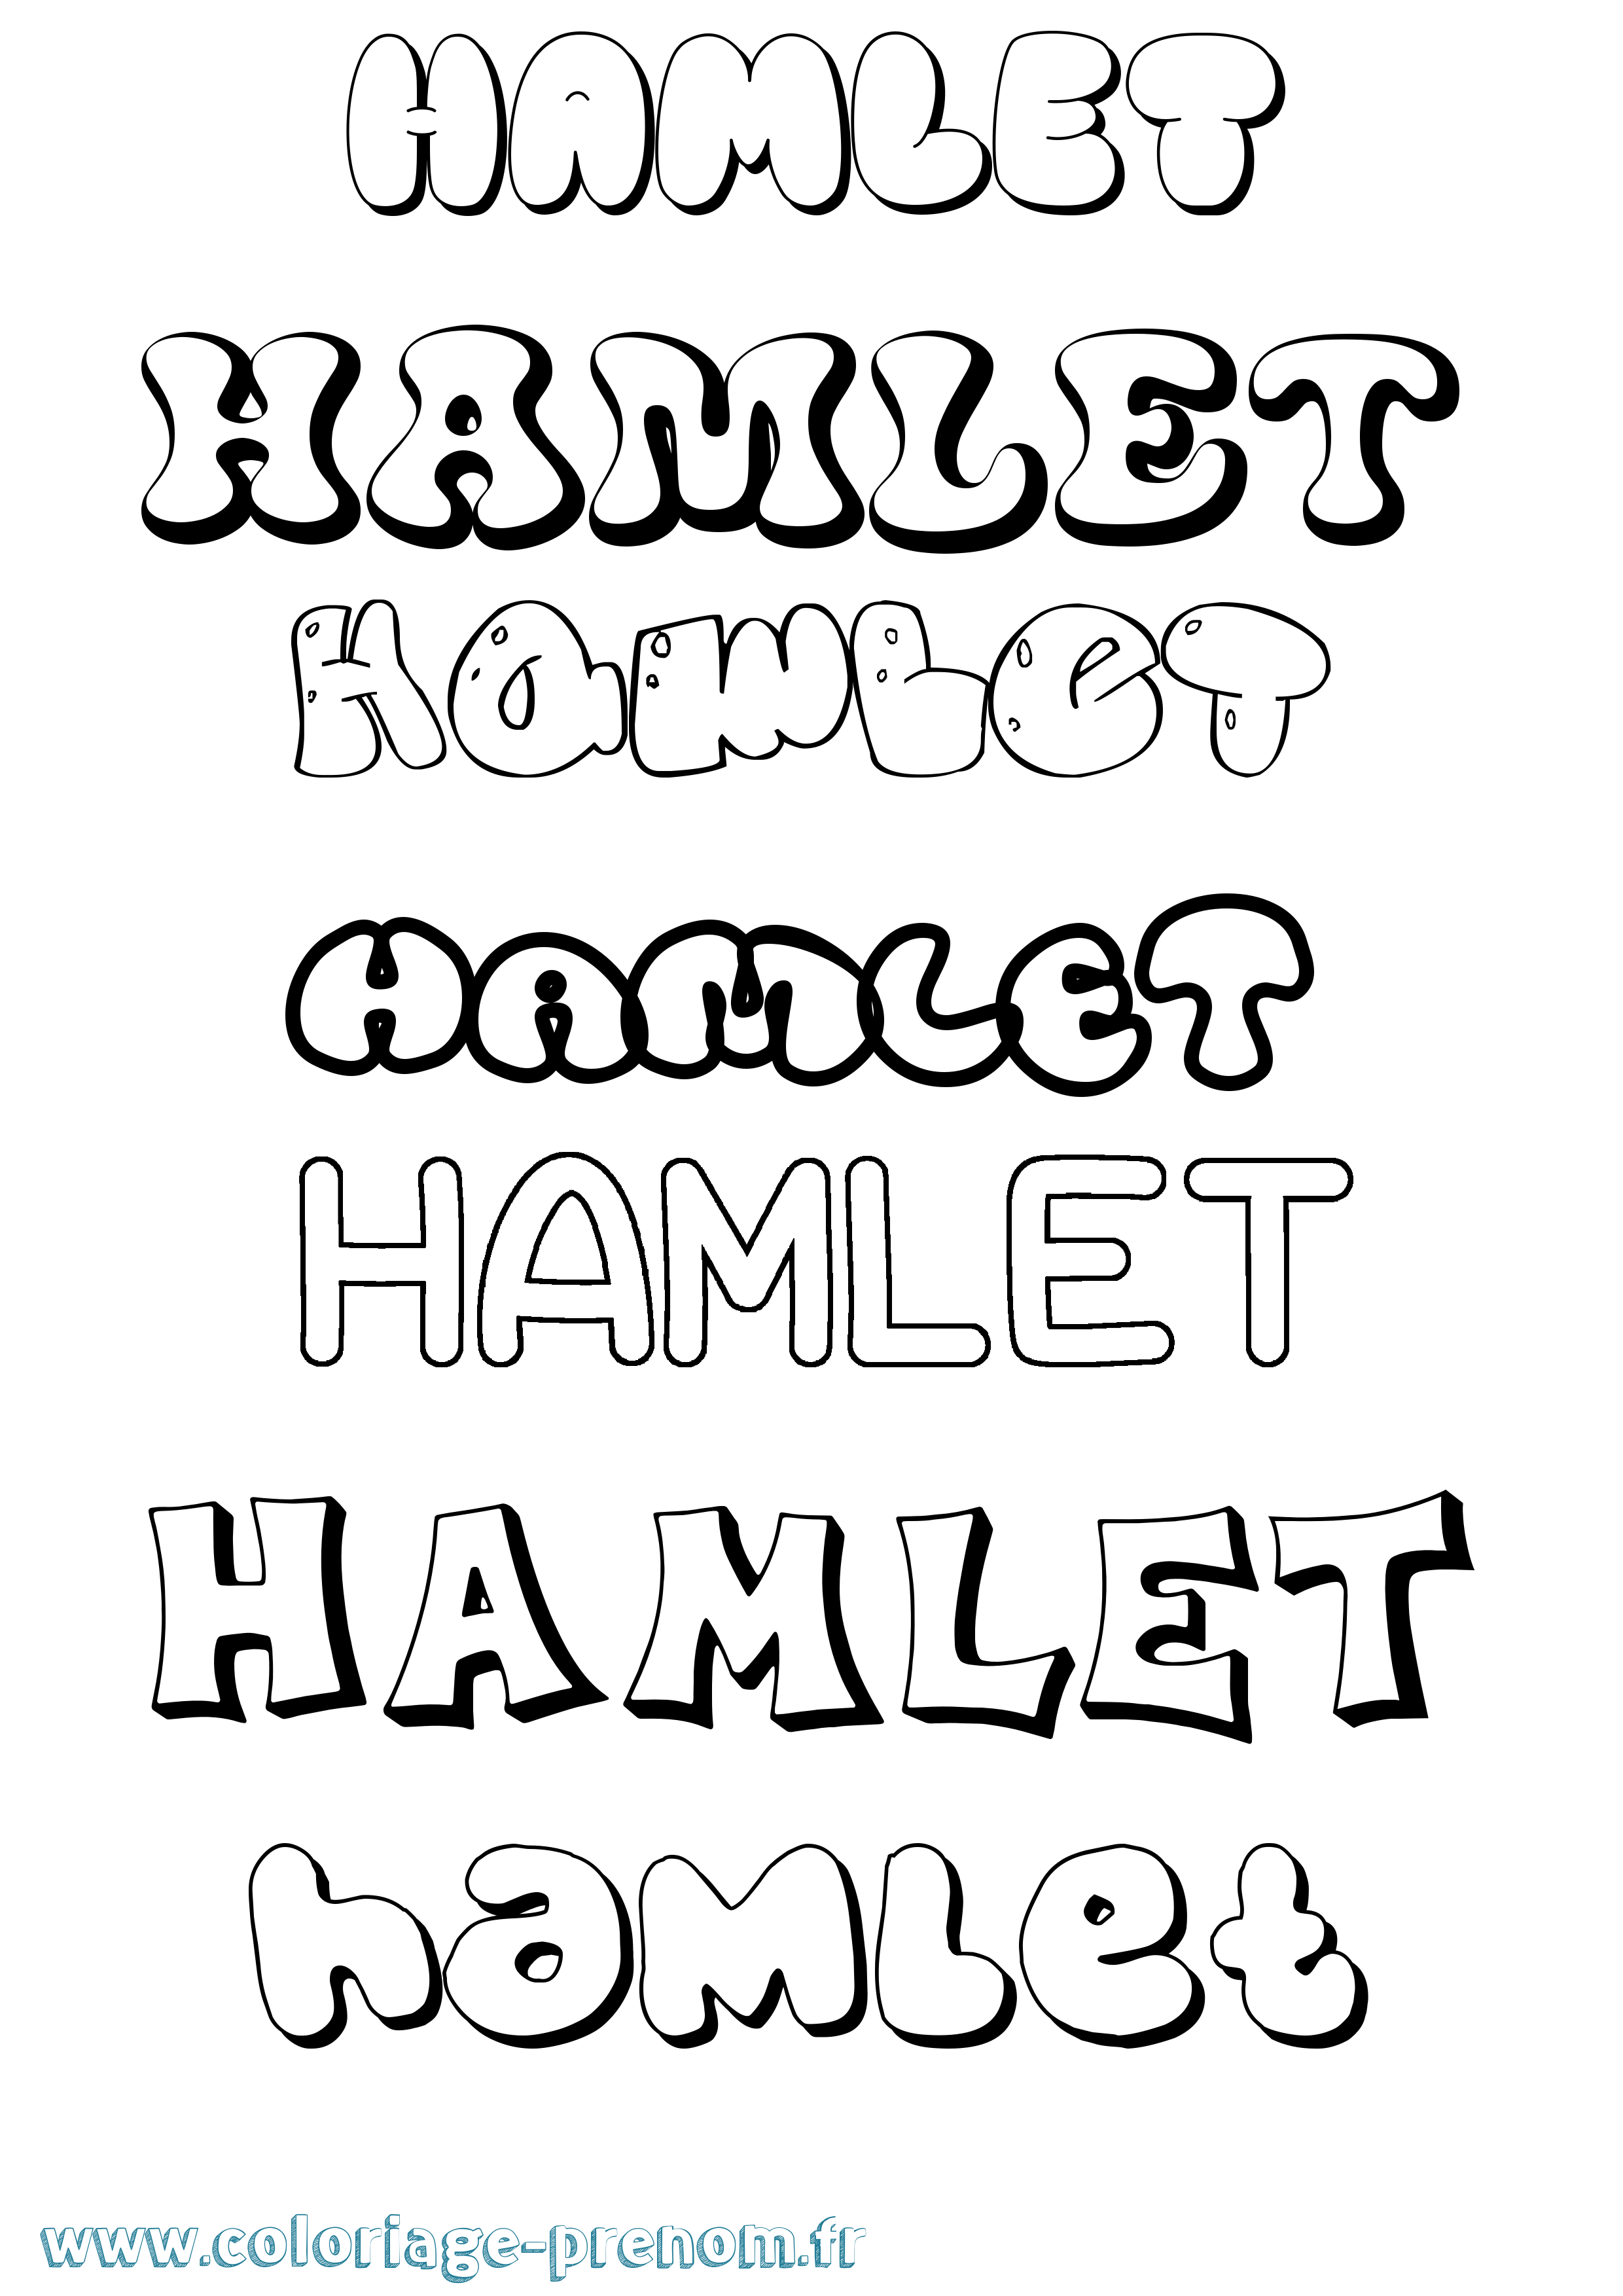 Coloriage prénom Hamlet Bubble